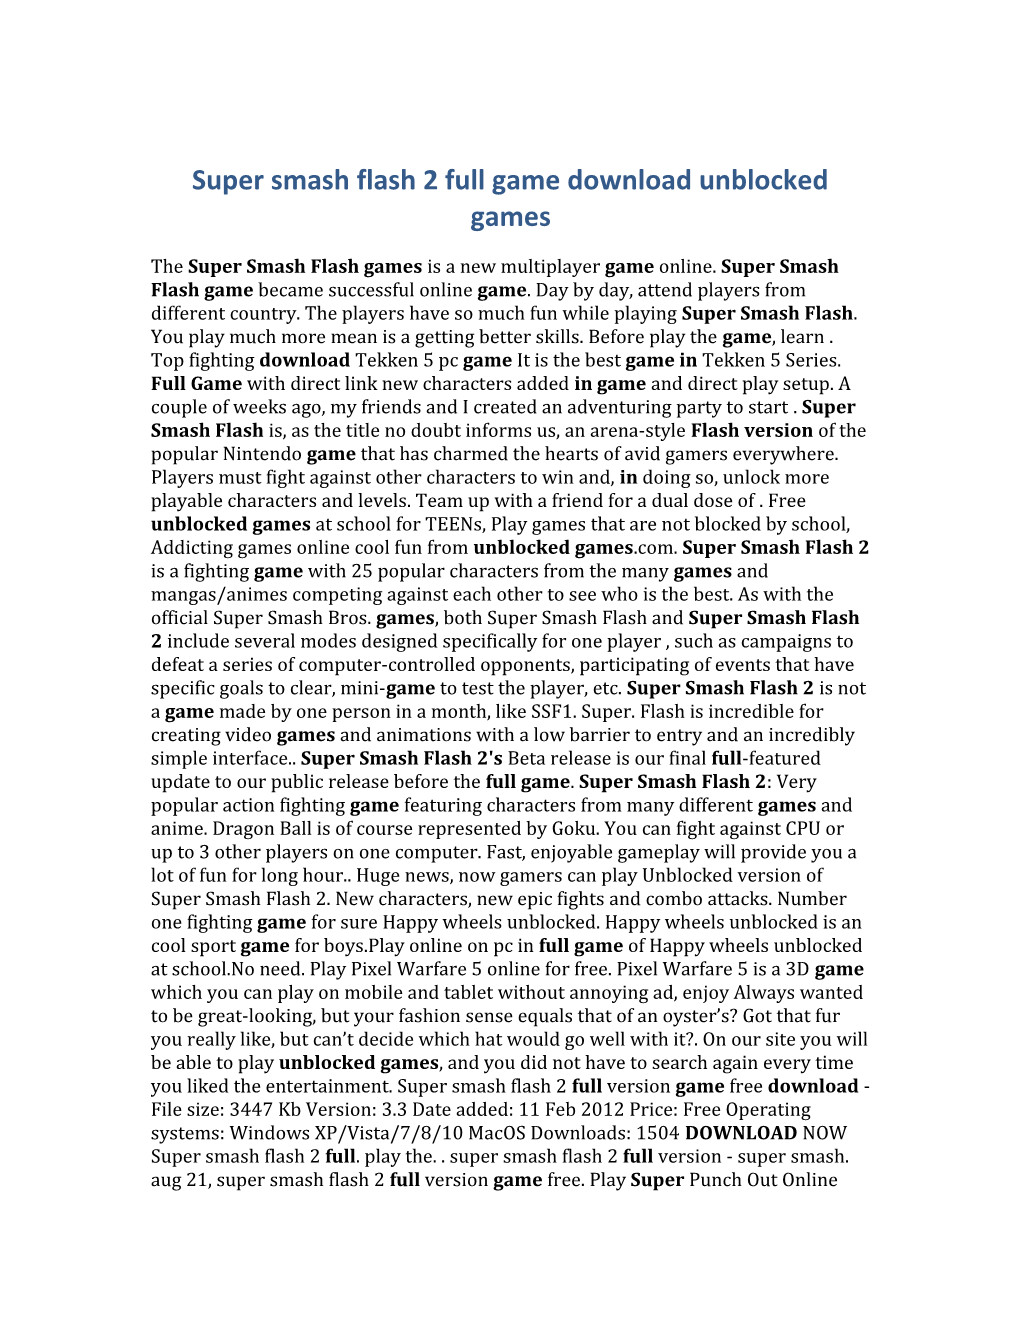 Super Smash Flash 2 Full Game Download Unblocked Games